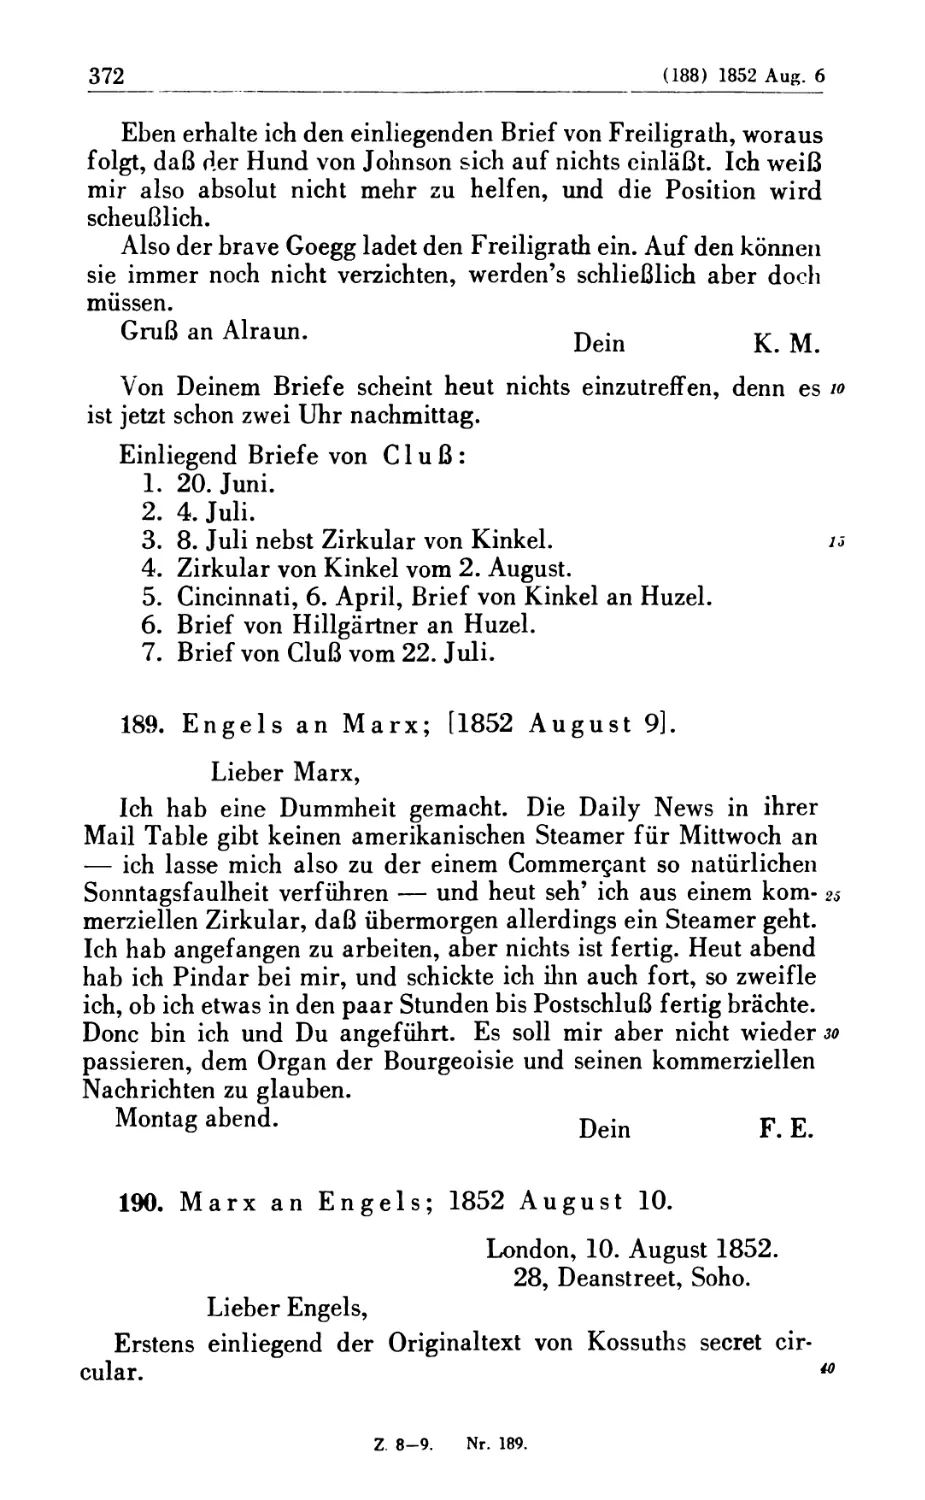 189. Engels an Marx; [1852 August 9]
190. Marx an Engels; 1852 August 10